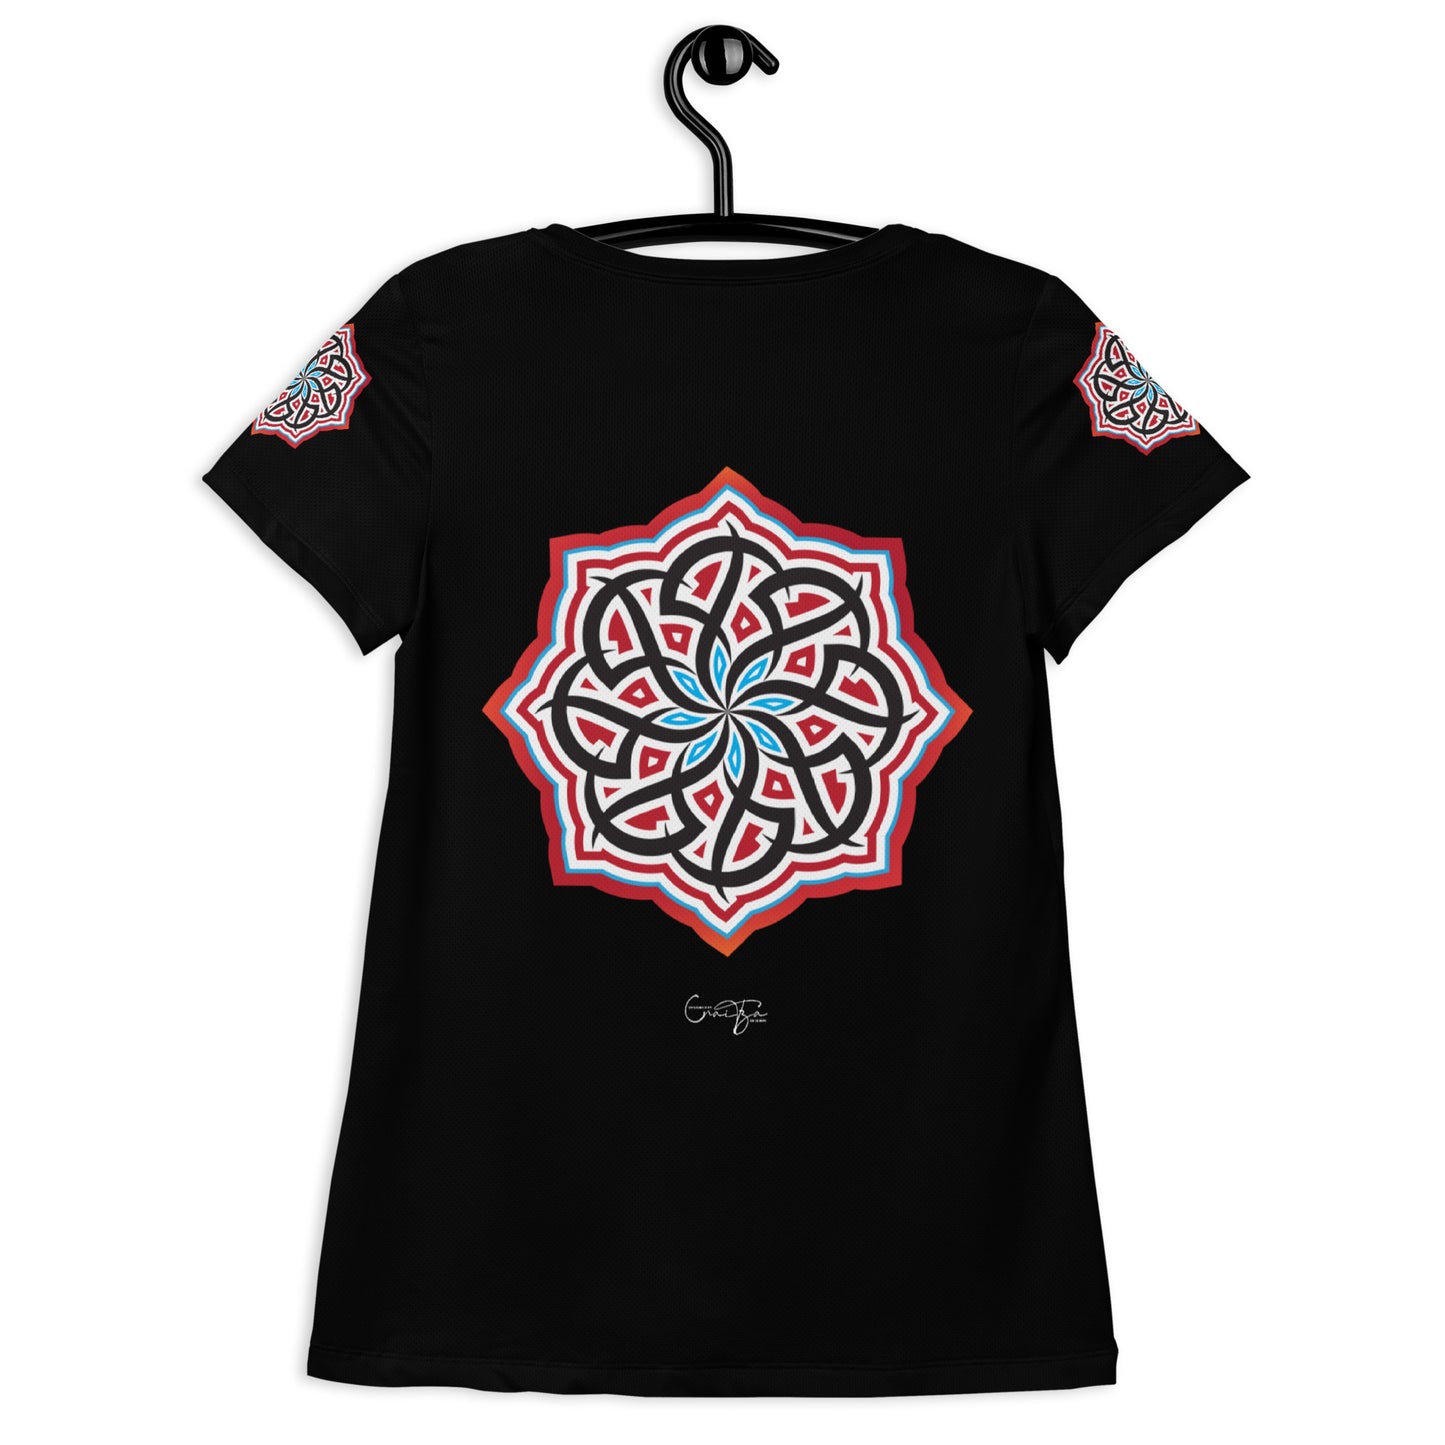 Arabian Summer Dream - All-Over Print Women's Athletic T-shirt by Craitza© Black Edition